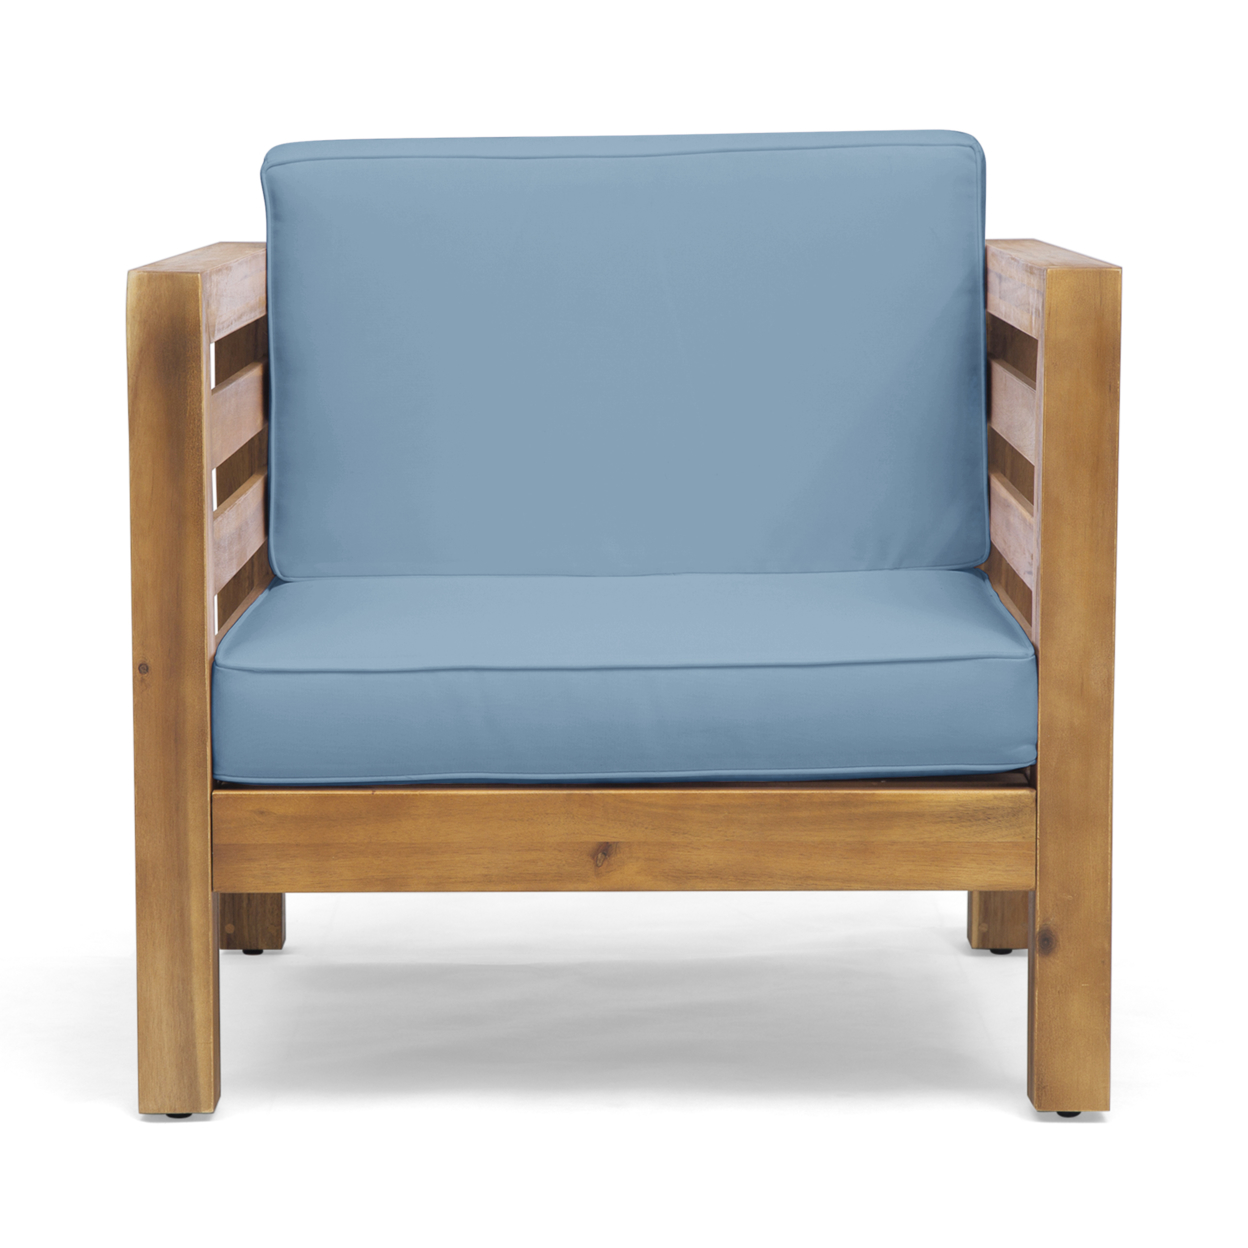 Louise Outdoor Acacia Wood Club Chair With Cushion - Gray Finish + Dark Gray